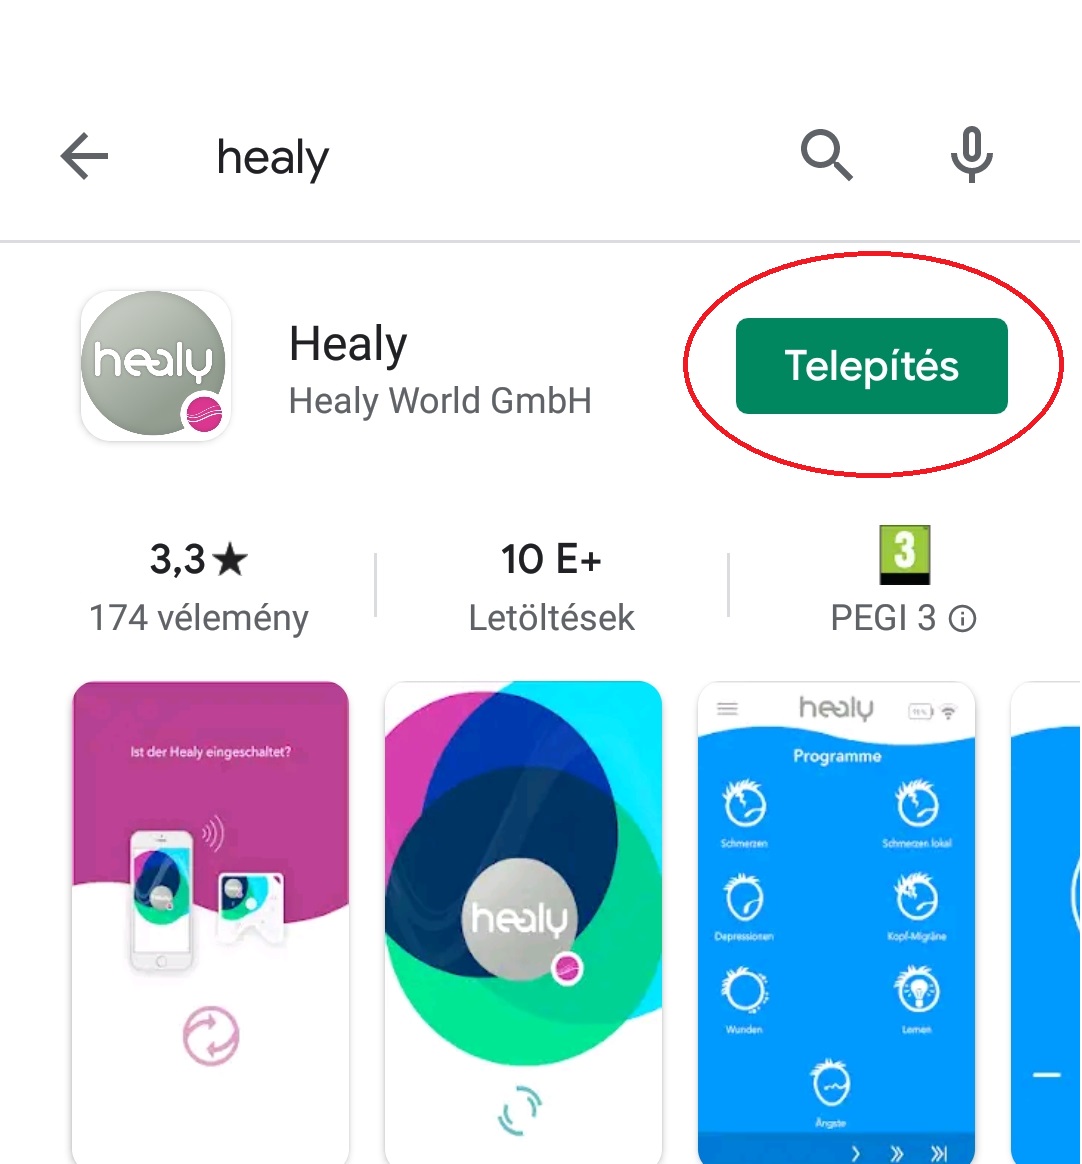 healy app 01